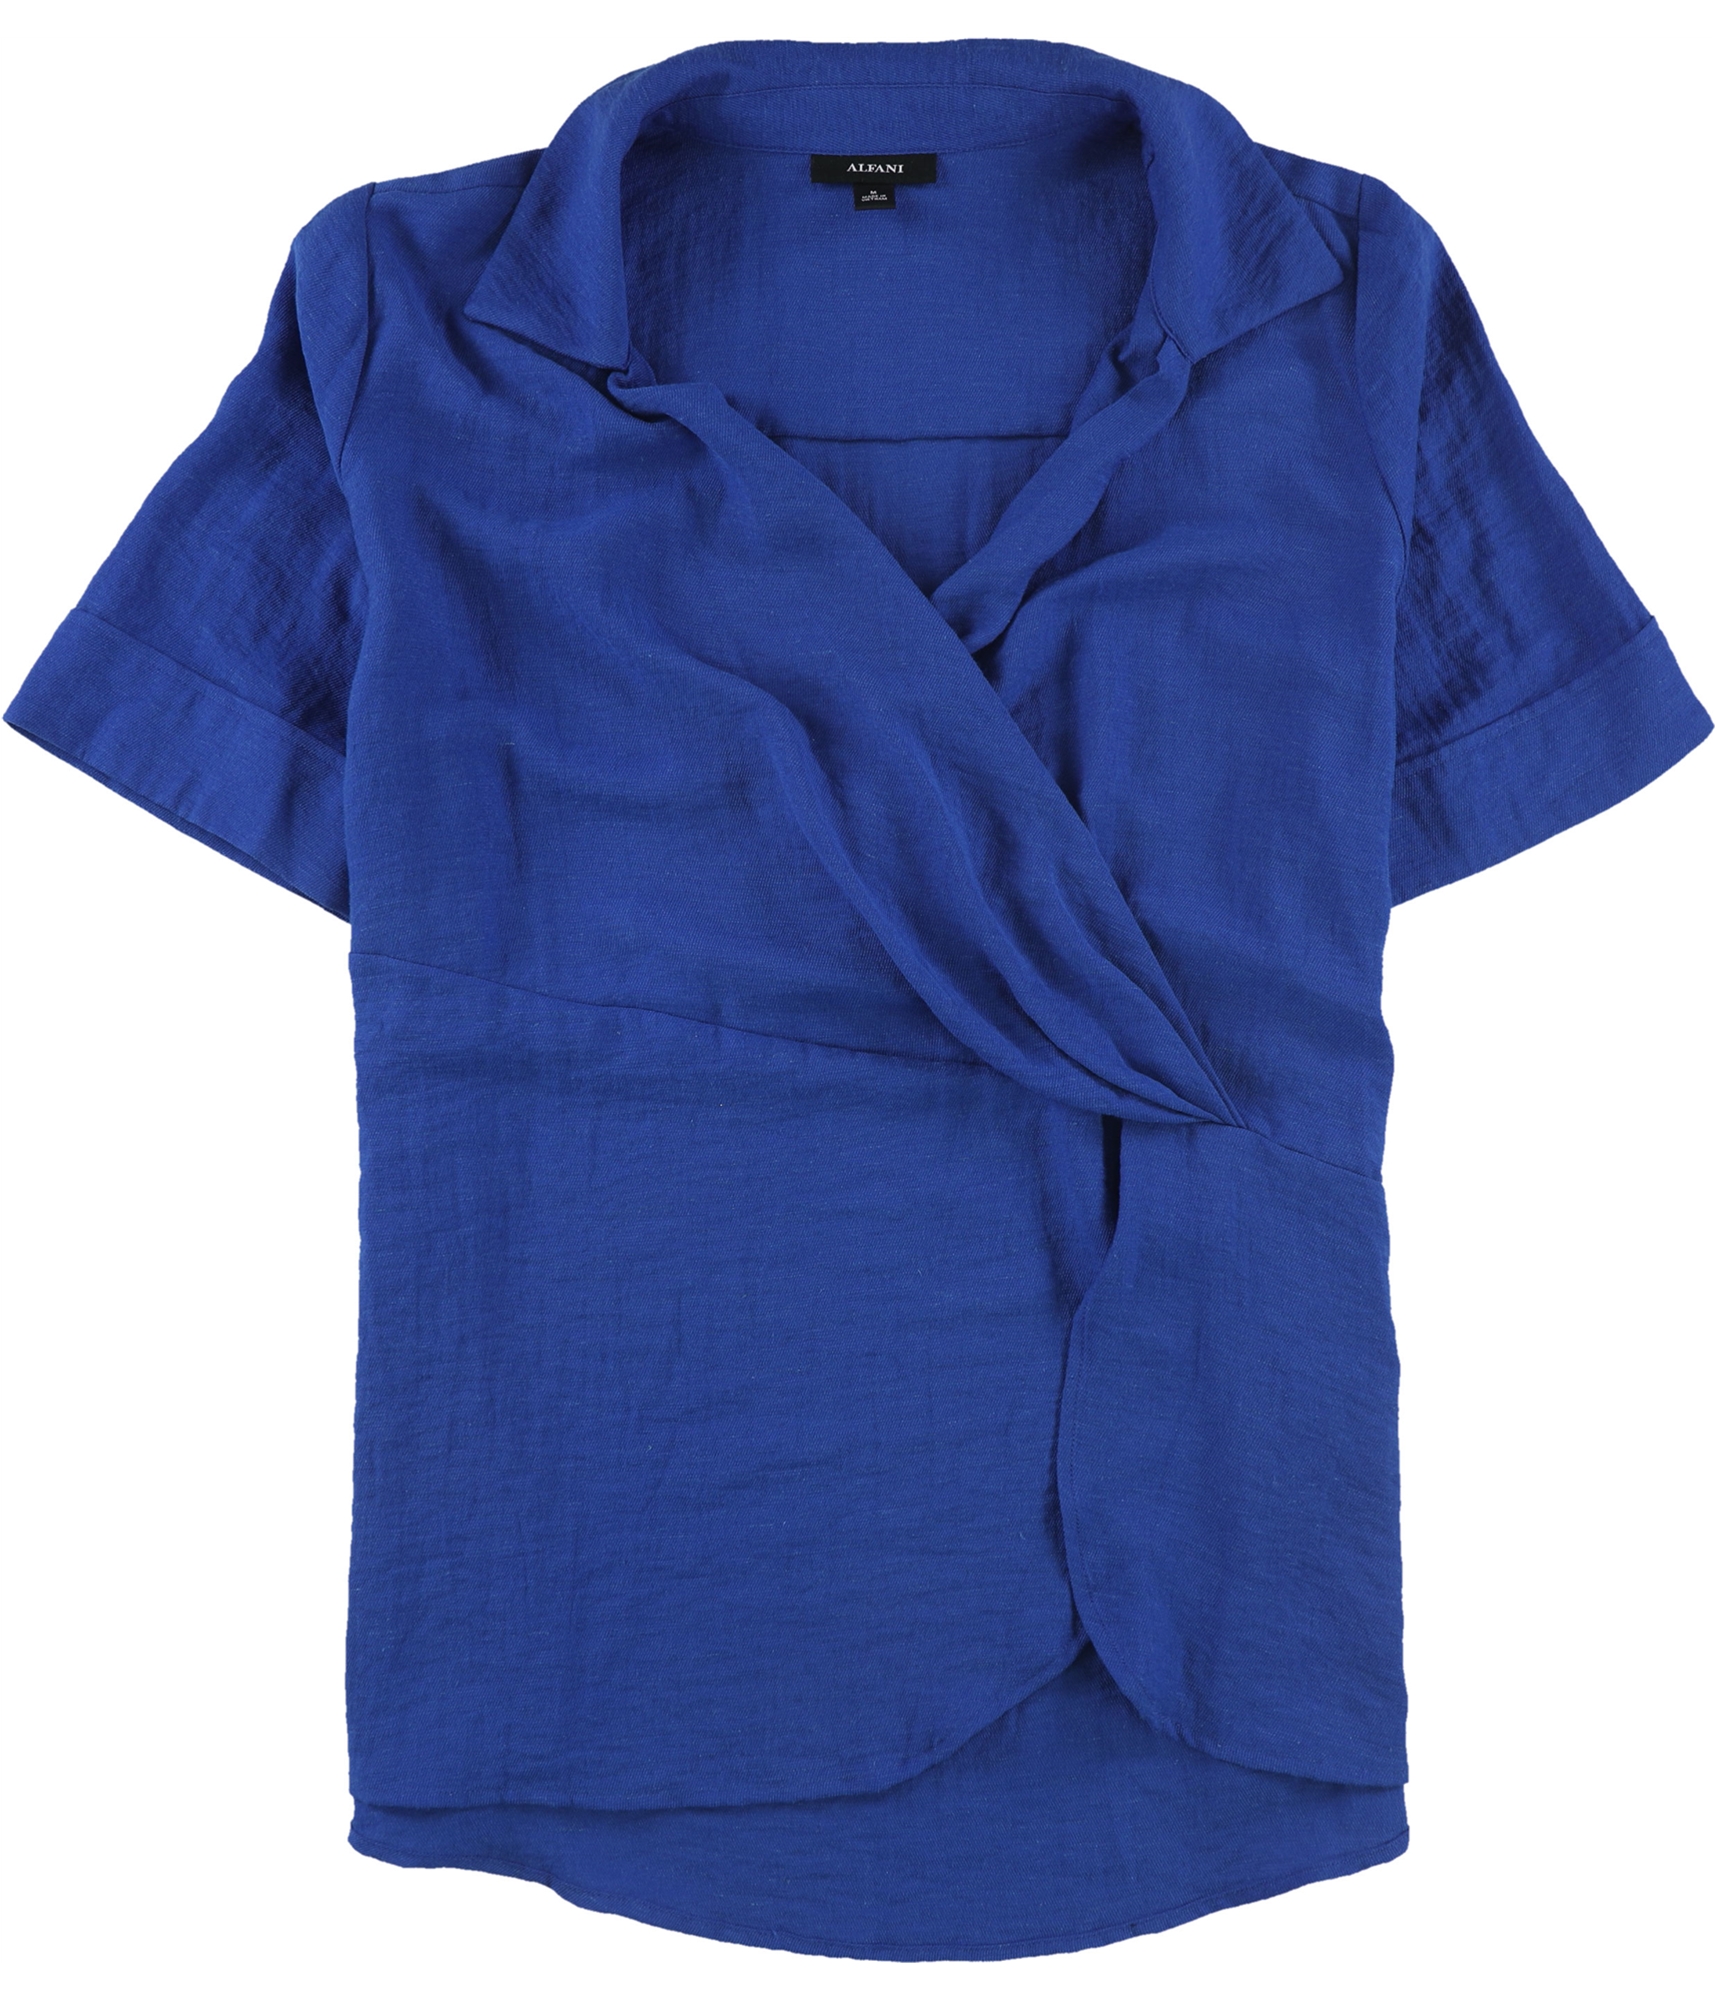 Alfani Womens Blue Short Sleeve V Neck Top Size M for sale online | eBay